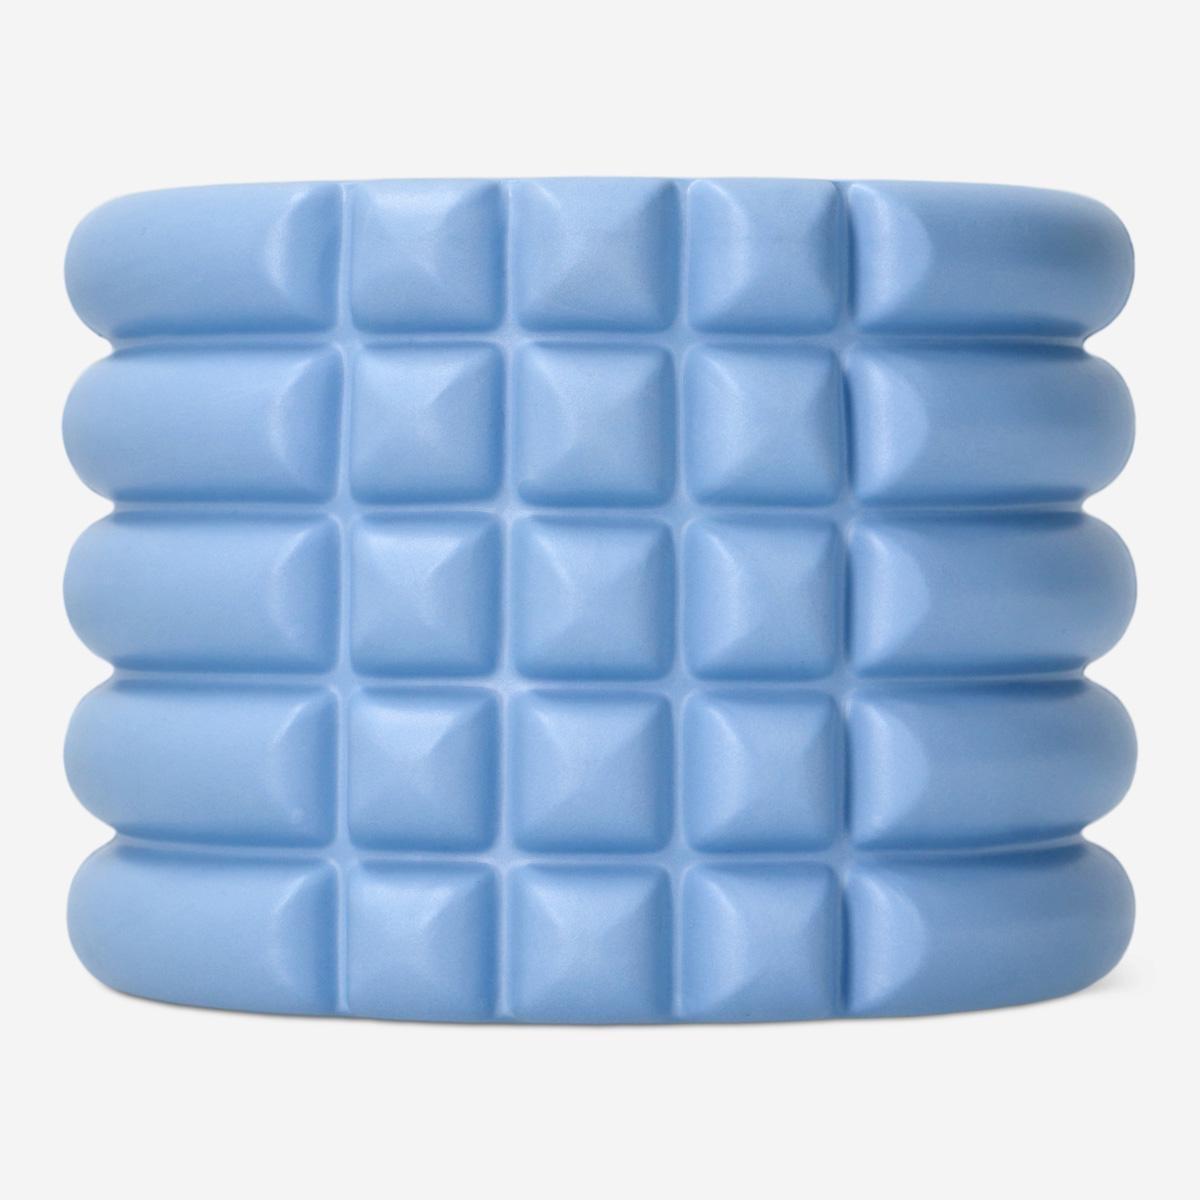 Blue massage roller